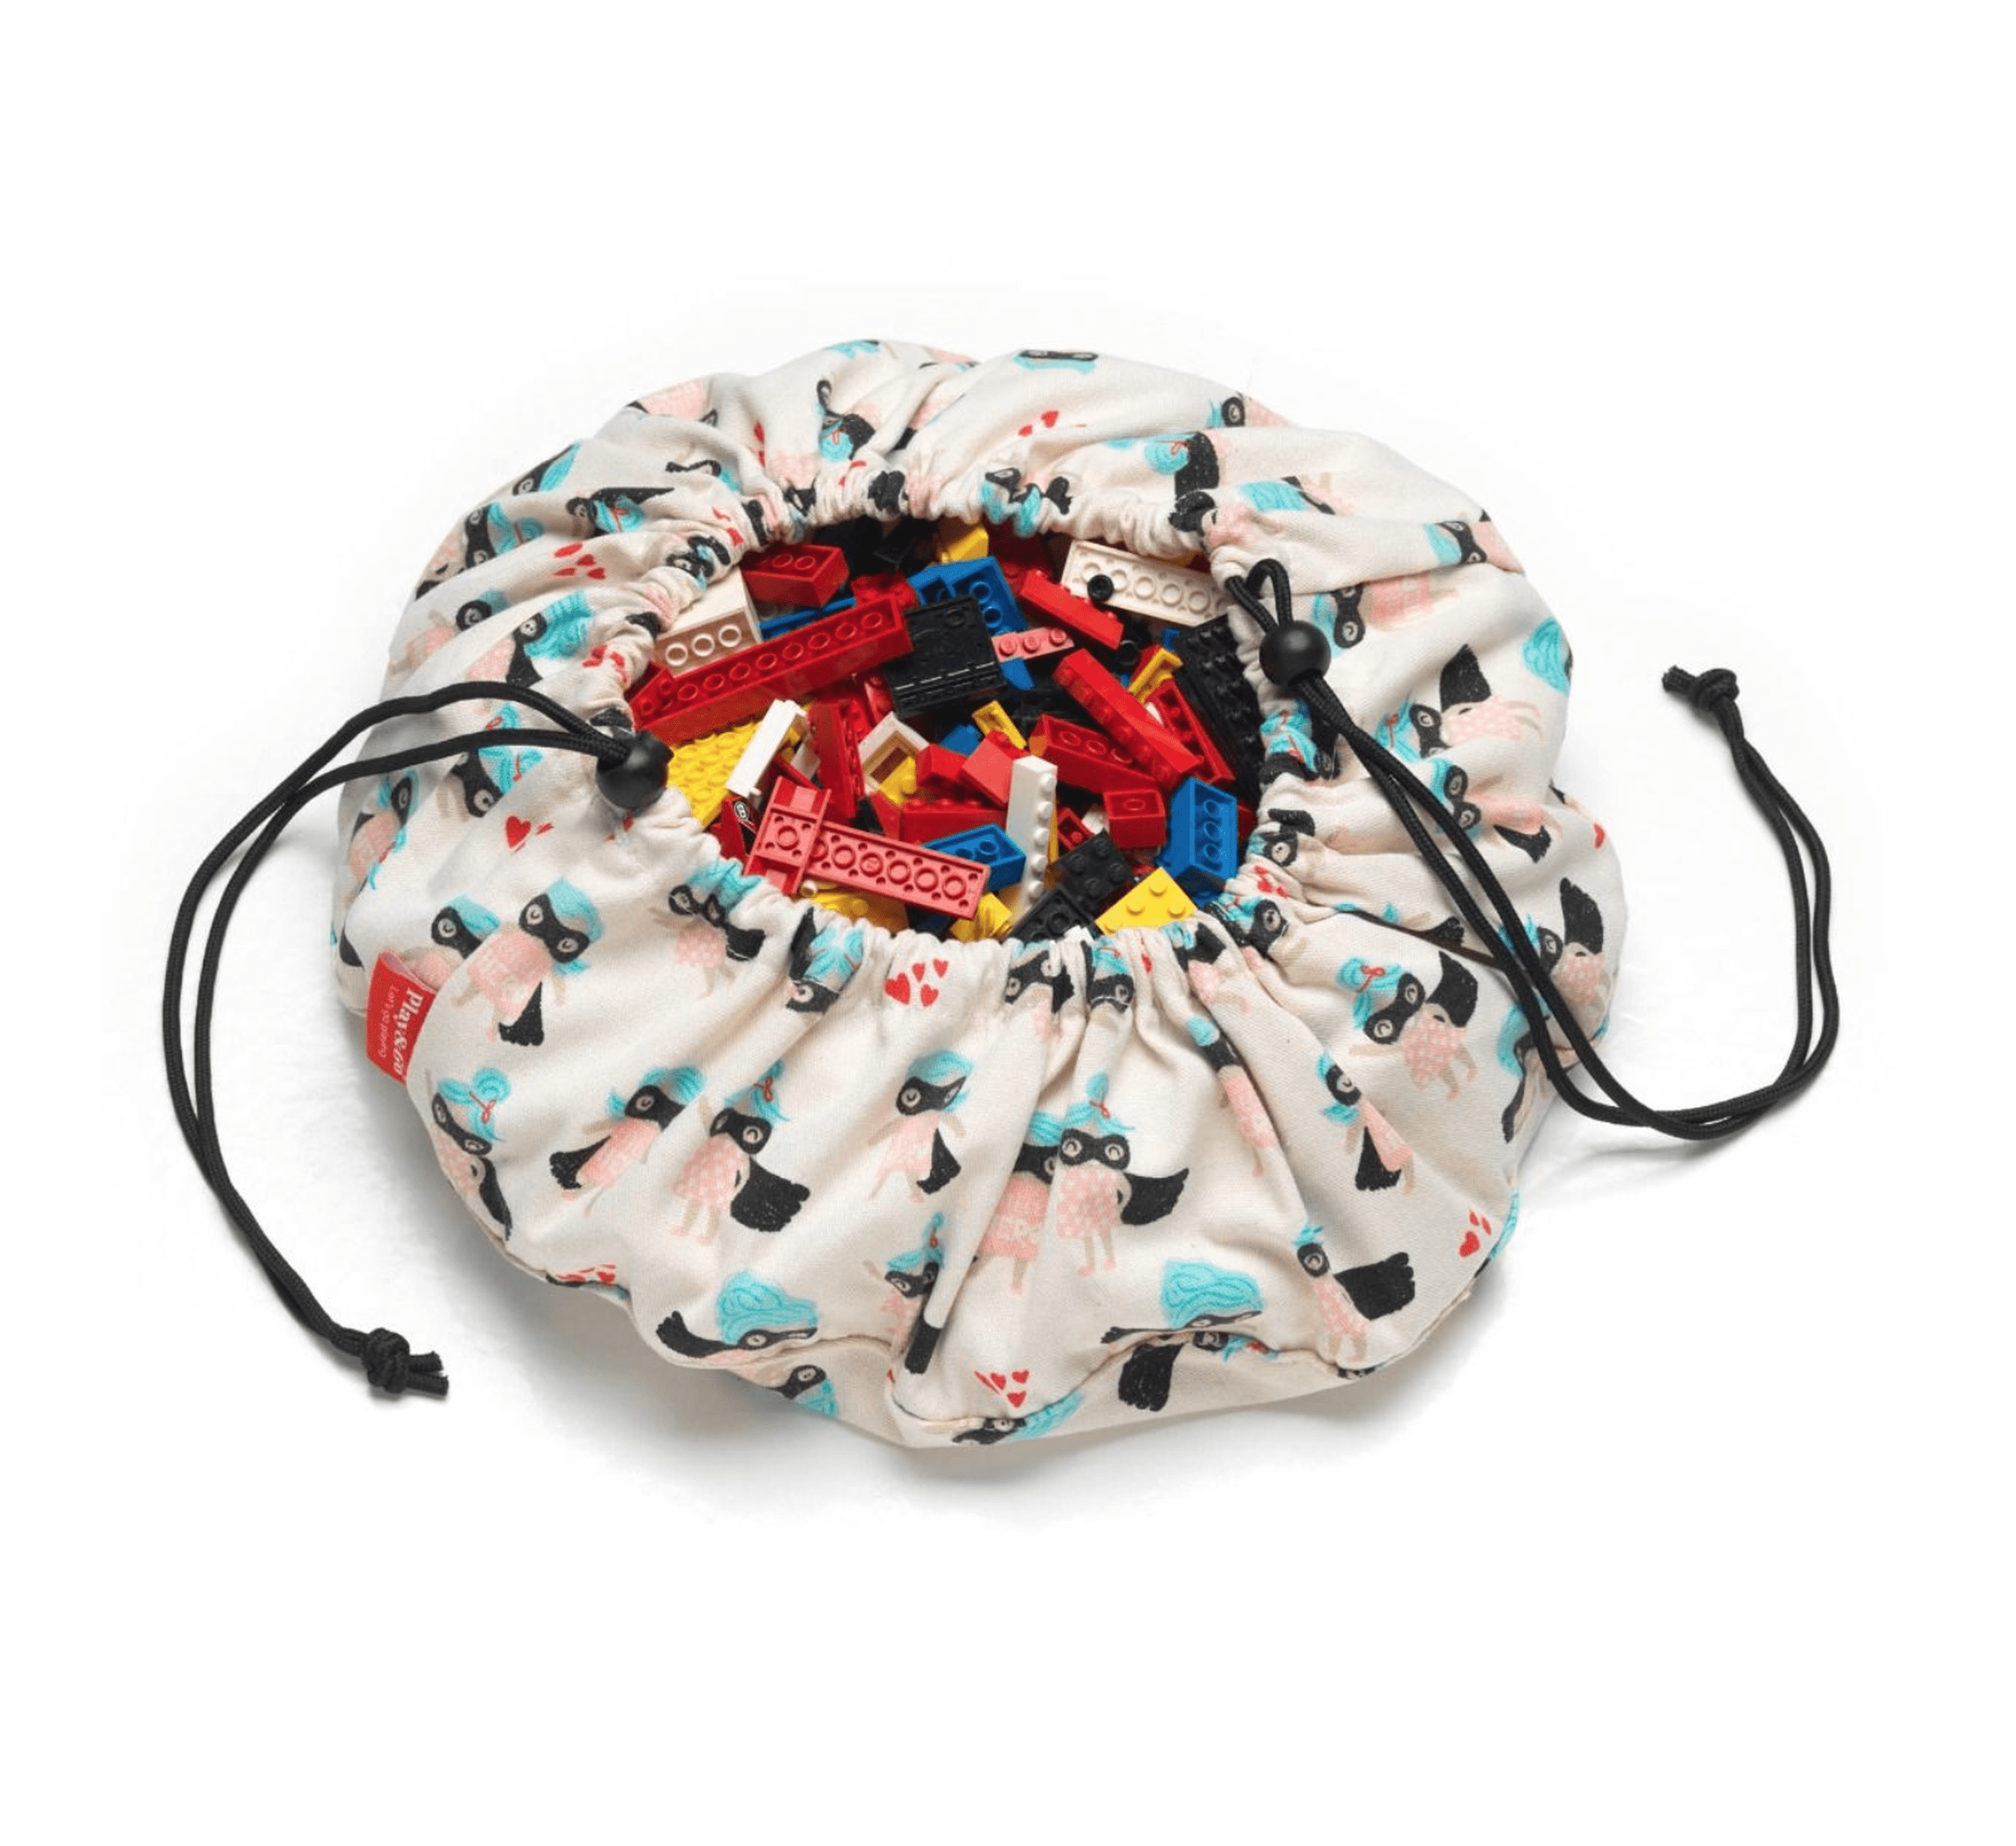 Supergirl - Toy Storage Bag (mini)-Storage Bag-Play&Go-jellyfishkids.com.cy